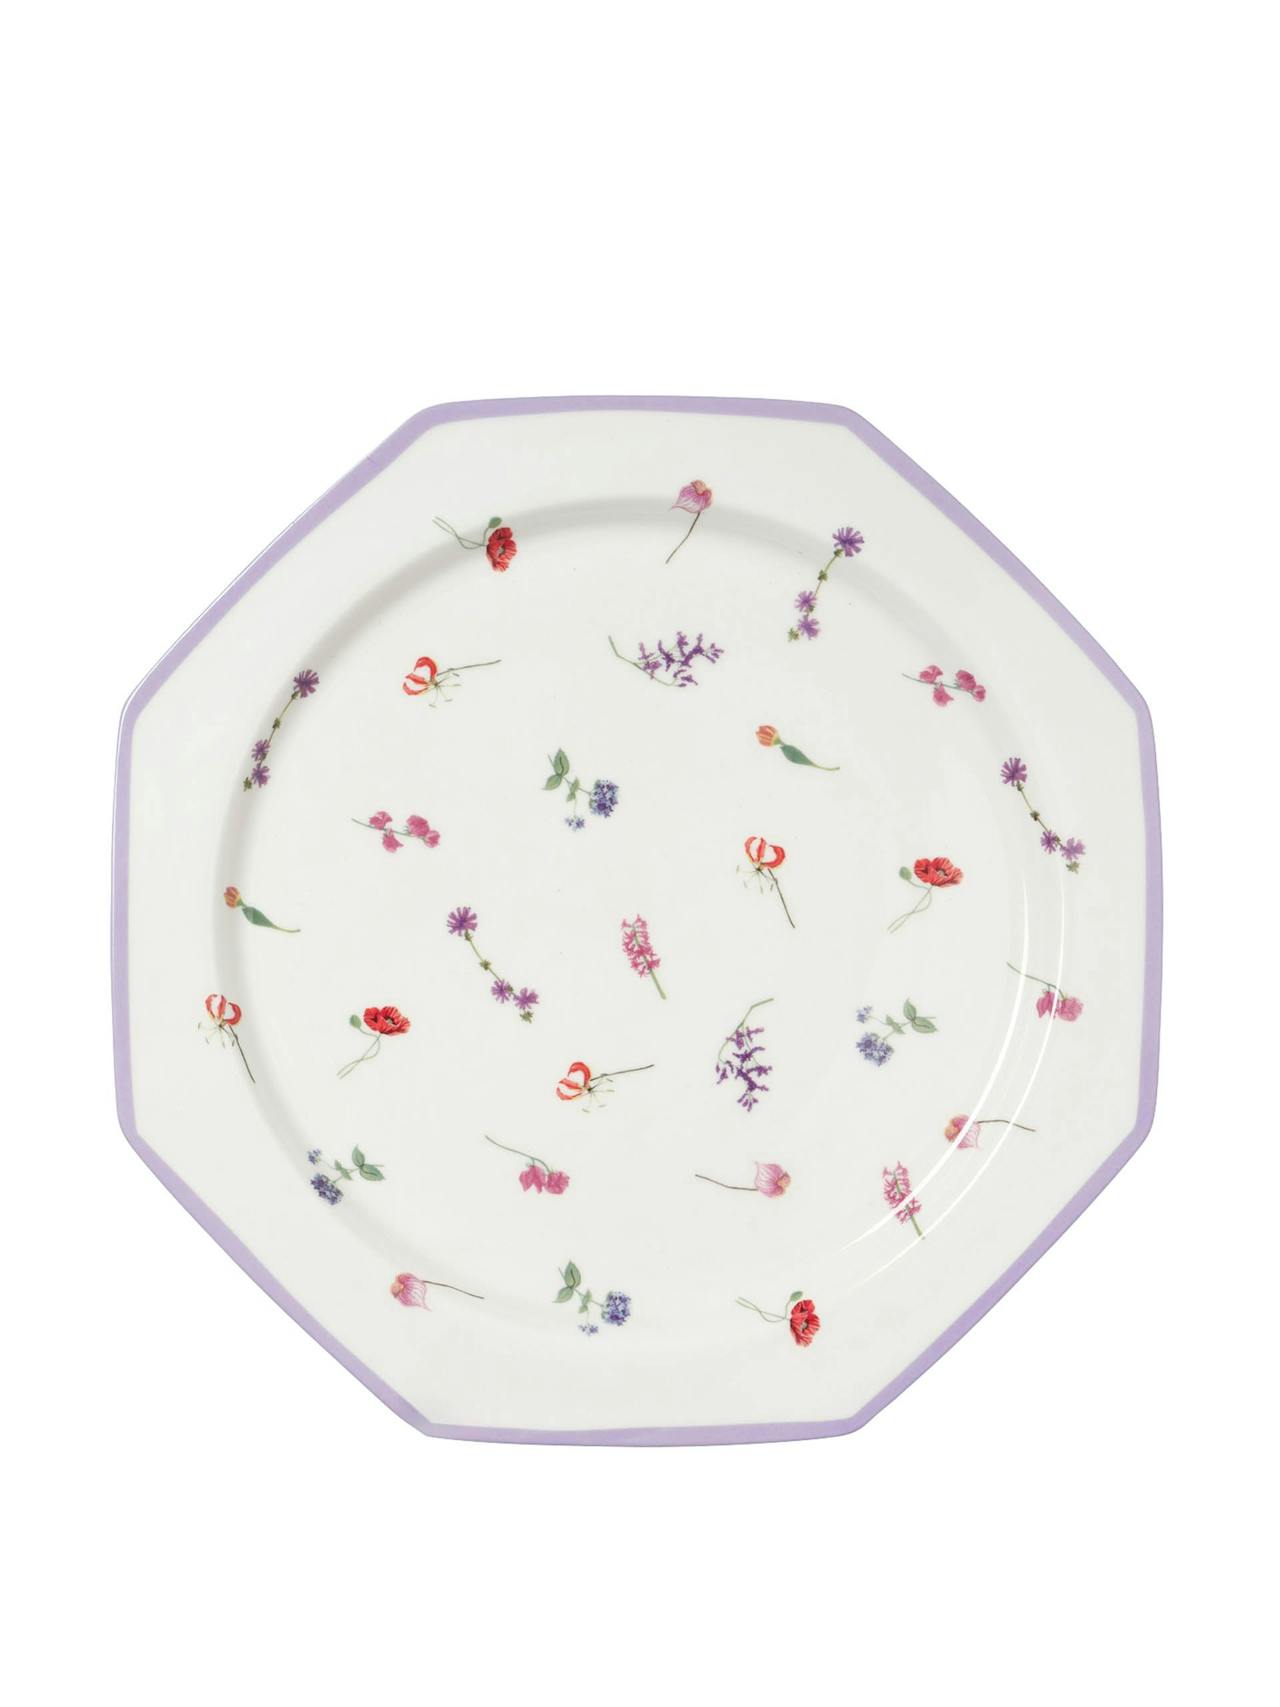 Floral octagonal plate set